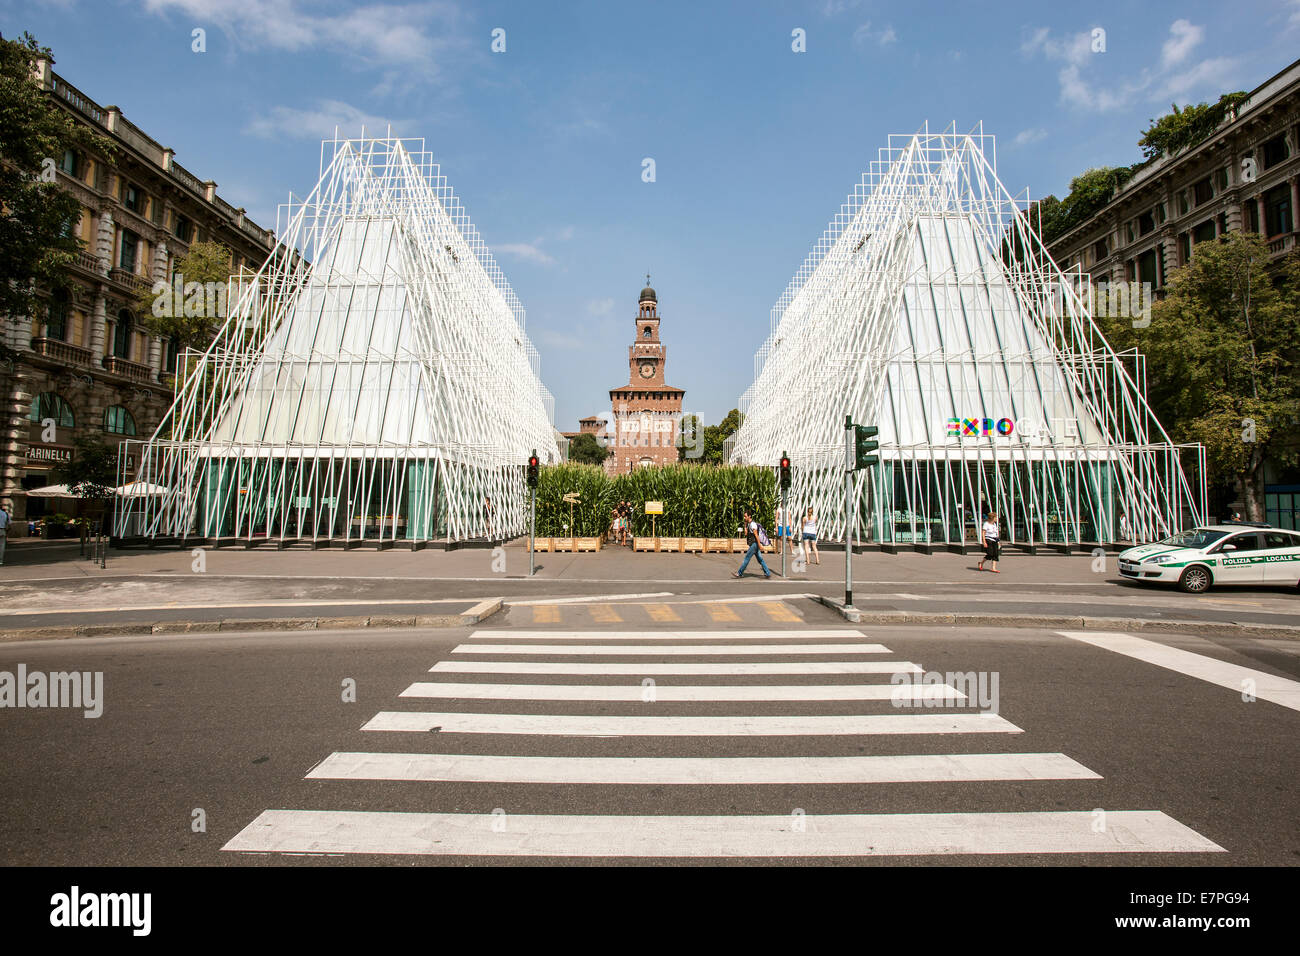 Milan, Expo 2015, EXPOGATE, Fair Universal, Exposition, Sforzesco castle, gate, infopoint, pedestrian crossing, Lombardy, Italy Stock Photo